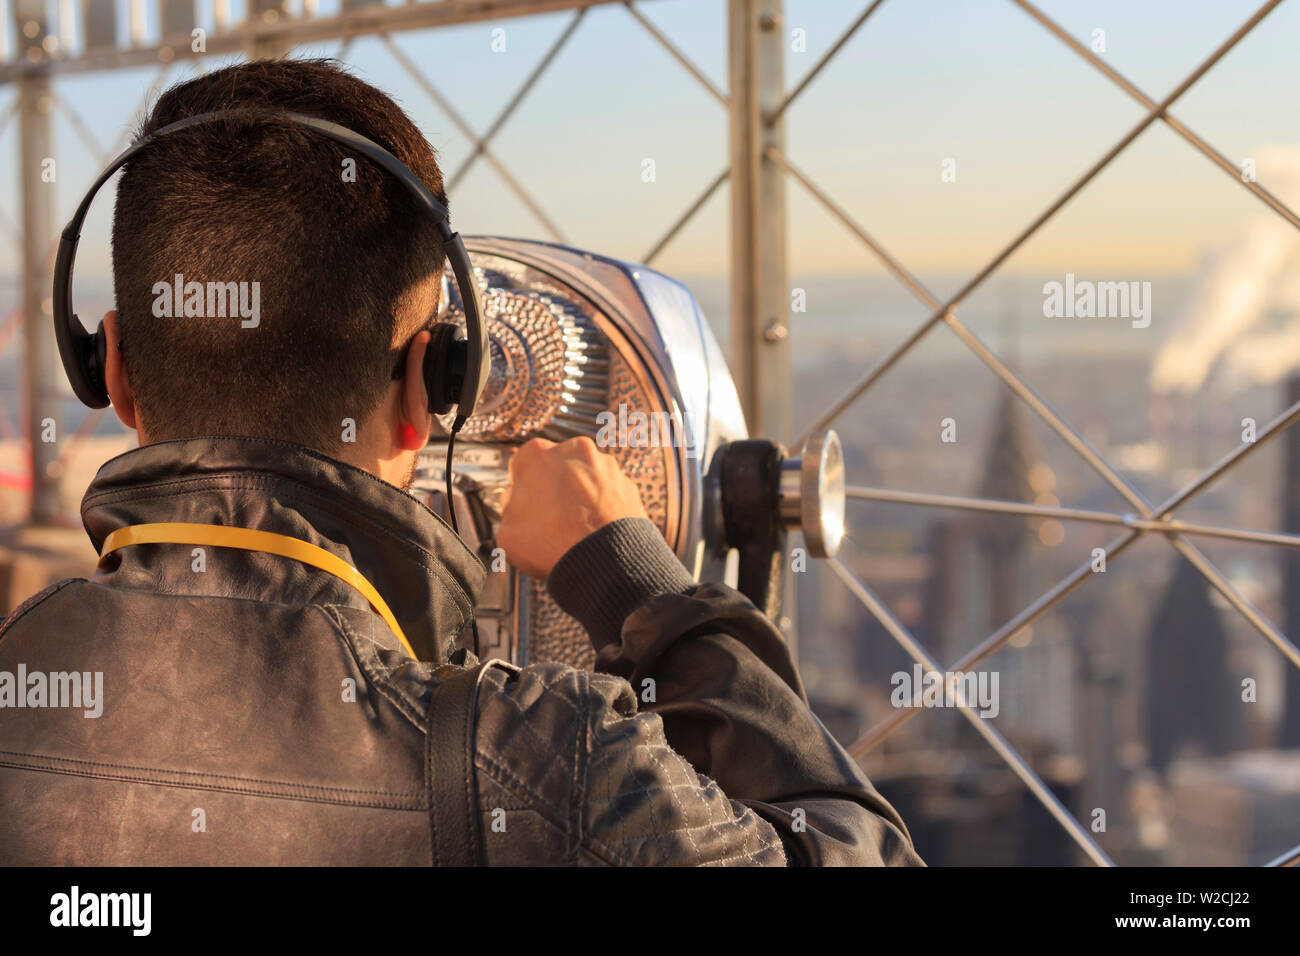 USA, New York, New York City, Manhattan, Empire State Building Observatory Stockfoto